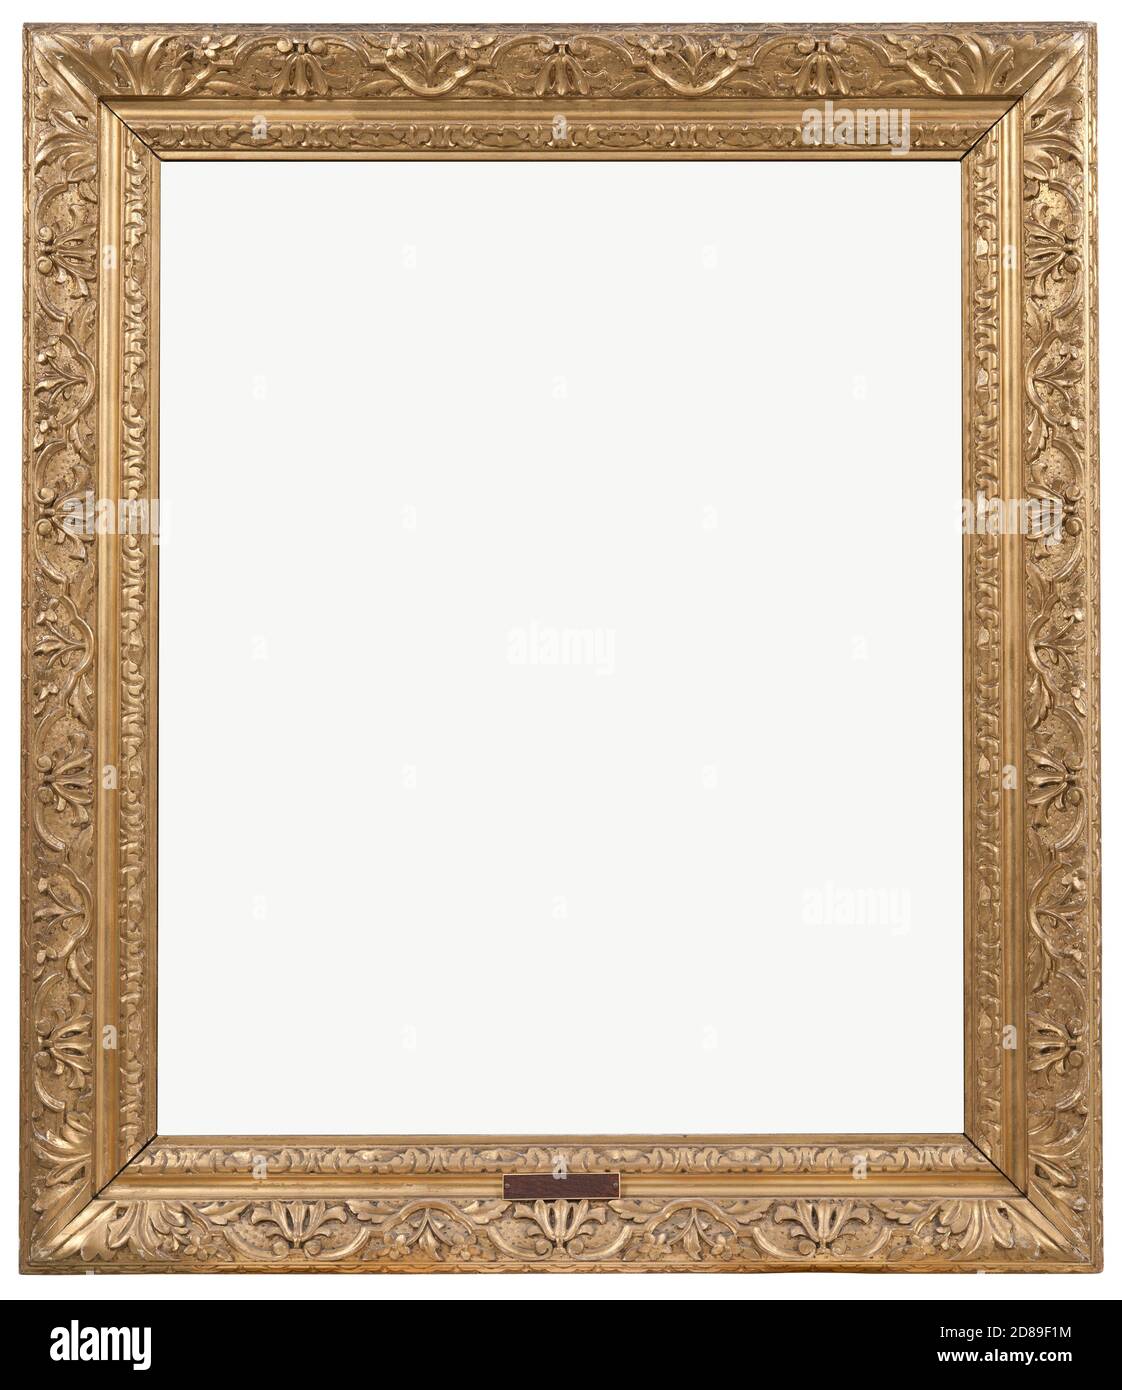 Golden vintage style frame, decorative Stock Photo